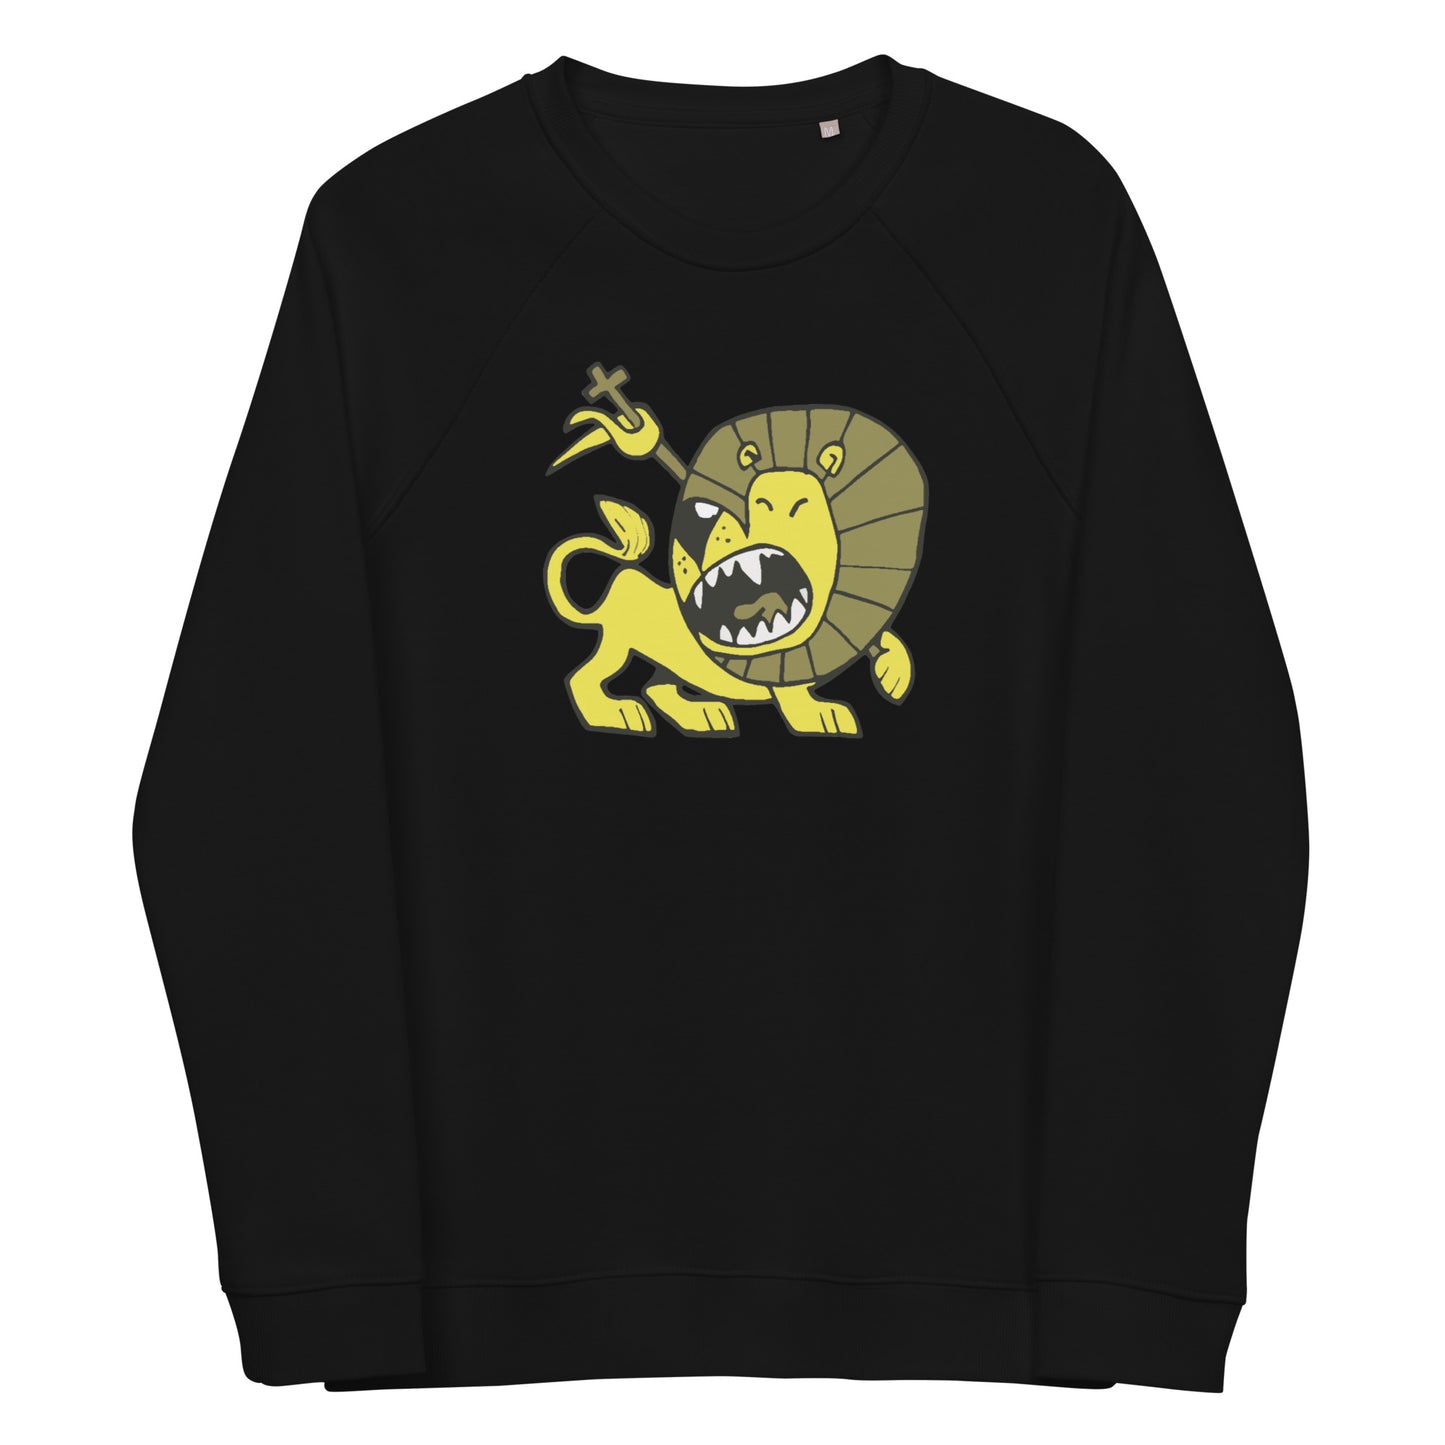 Cross Lion Sweatshirt